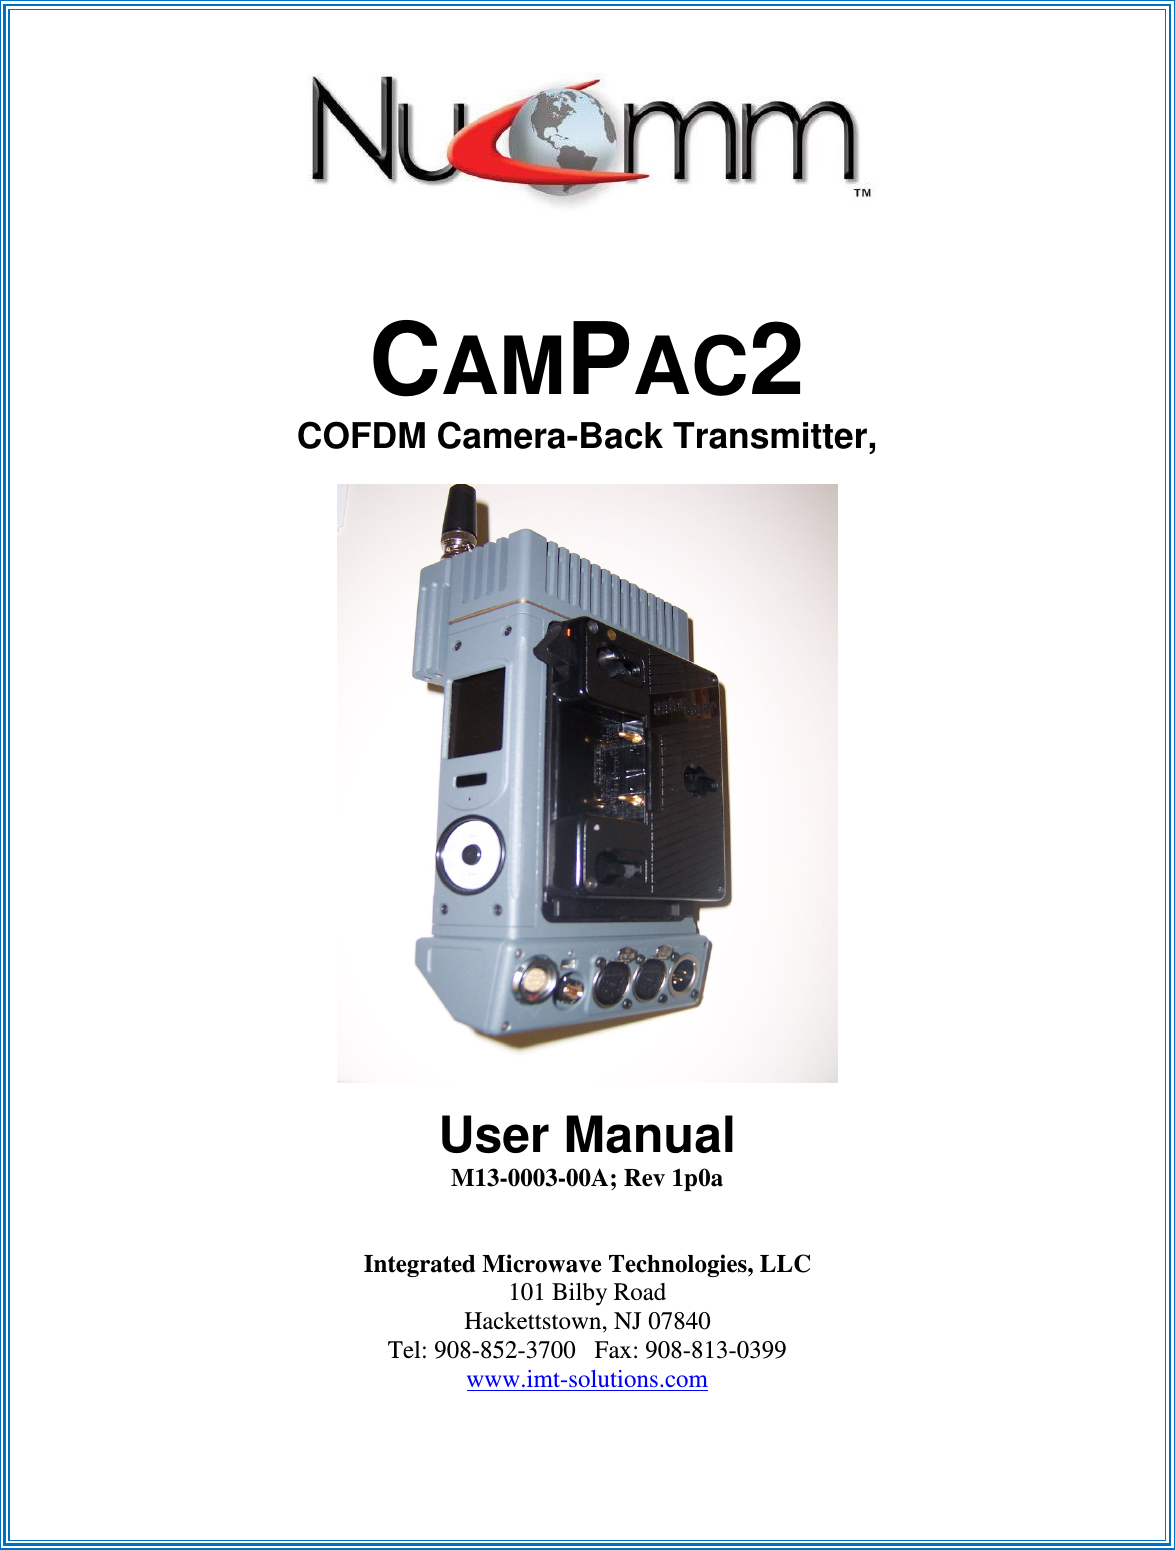         CAMPAC2 COFDM Camera-Back Transmitter,    User Manual M13-0003-00A; Rev 1p0a   Integrated Microwave Technologies, LLC 101 Bilby Road Hackettstown, NJ 07840 Tel: 908-852-3700   Fax: 908-813-0399 www.imt-solutions.com  